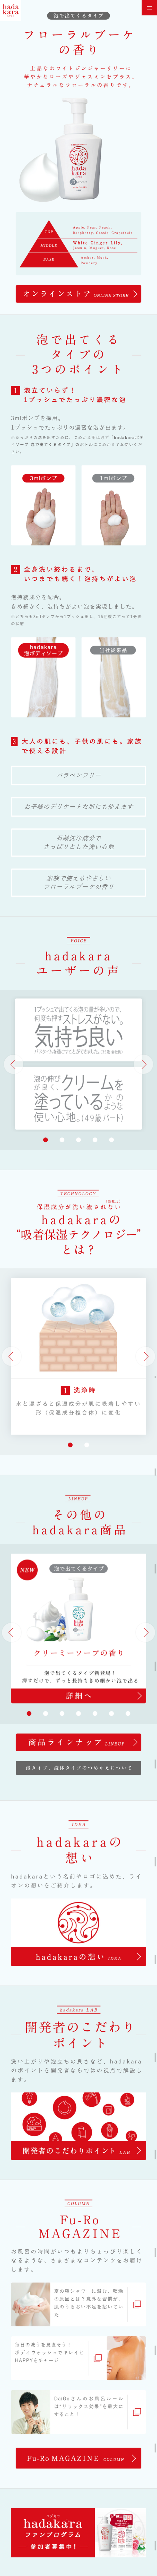 hadakara_sp_1